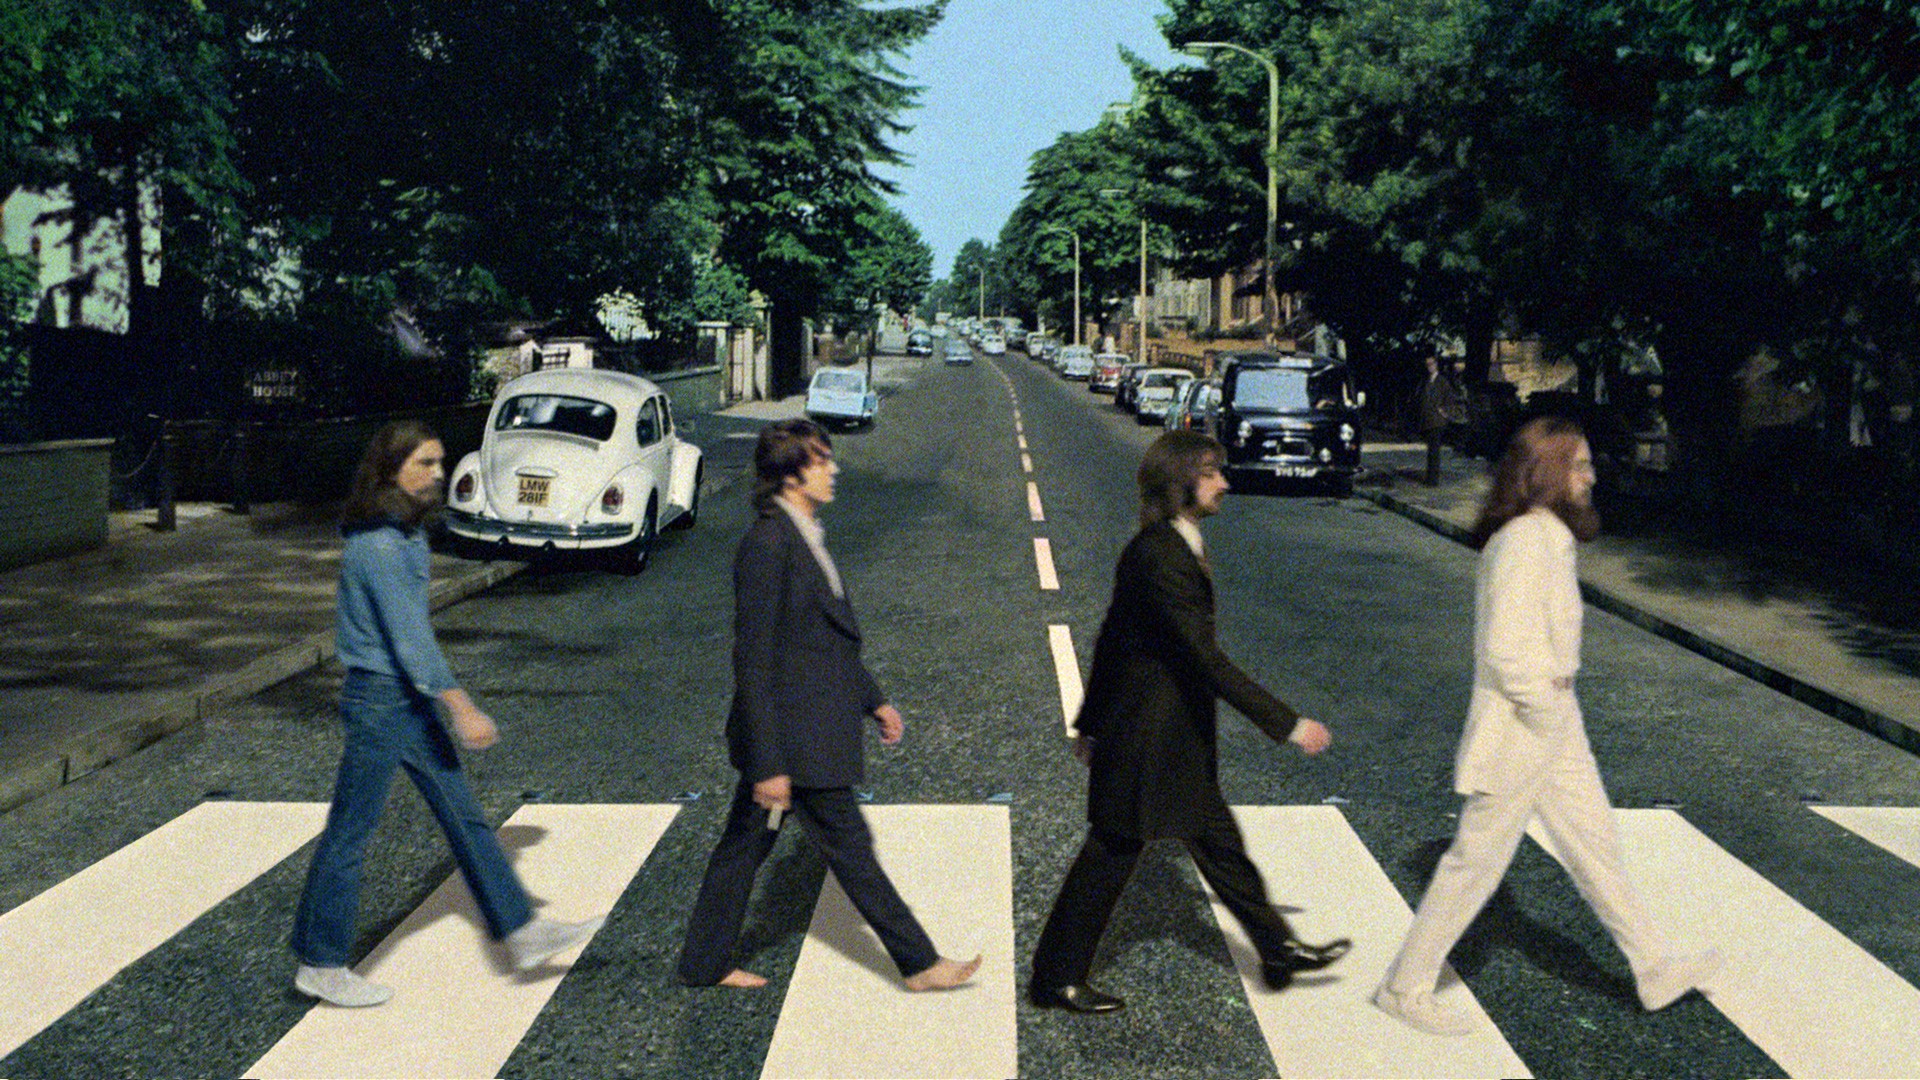 Abbey Road The Beatles Skachat Besplatnye Oboi Oboi7 Com